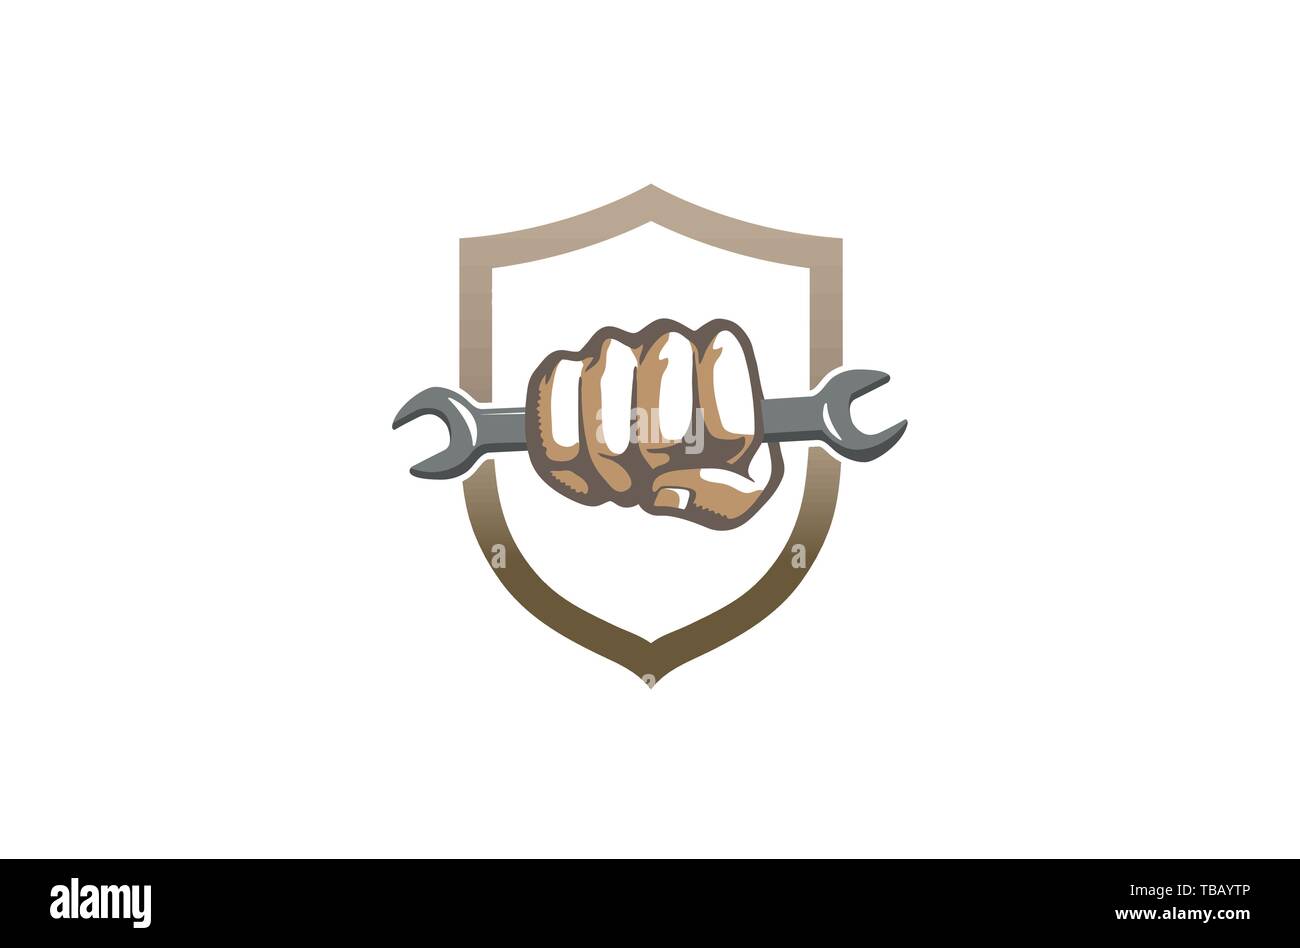 Kreative Schraubenschlüssel Faust Shield Logo Design Symbol Vektor Illustration Stock Vektor